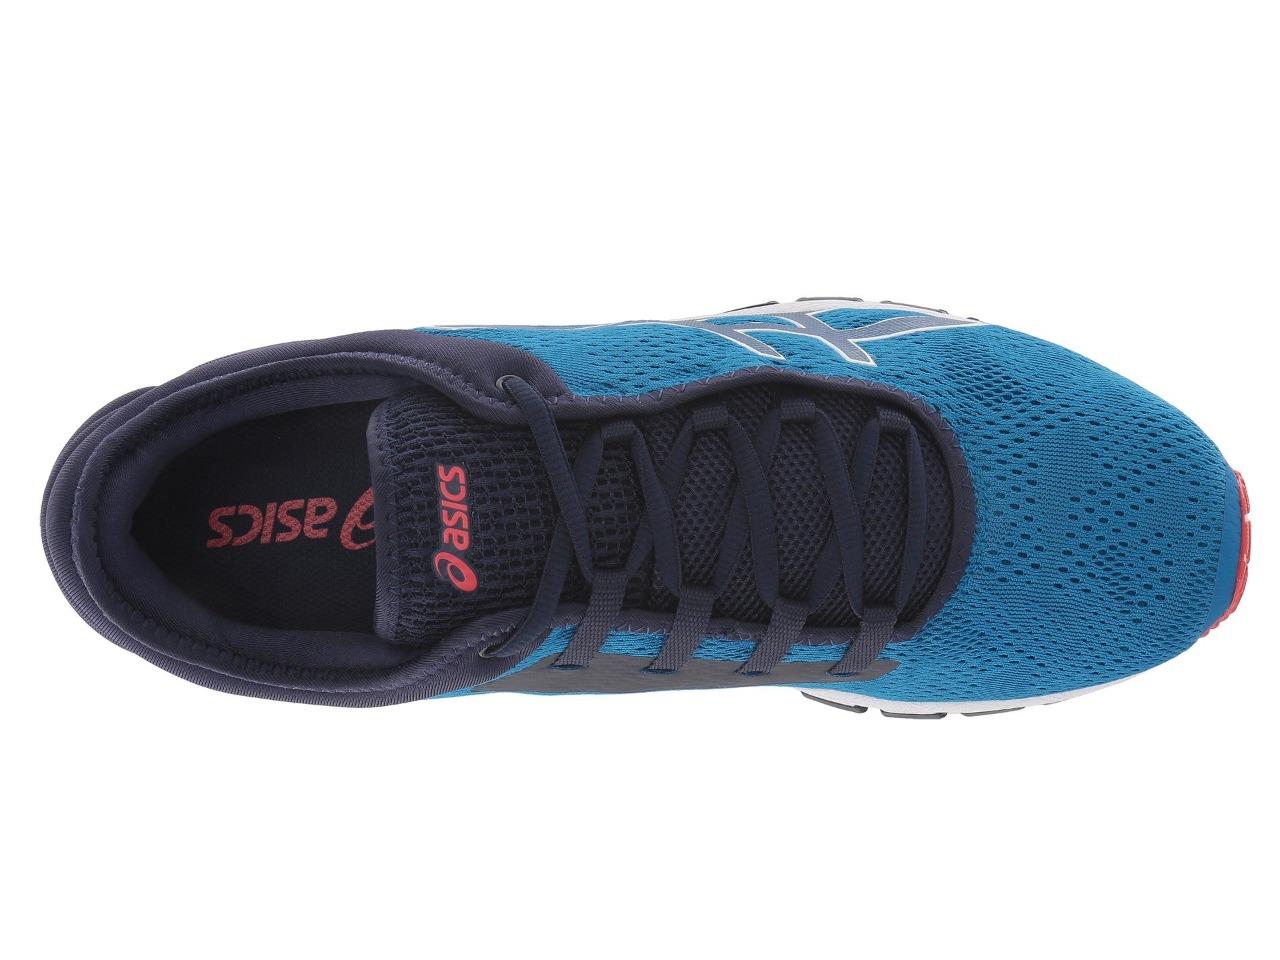 New ASICS Gel-Quantum 180 3 Running Shoes Men's Sizes 8-12.5 Blue or ...